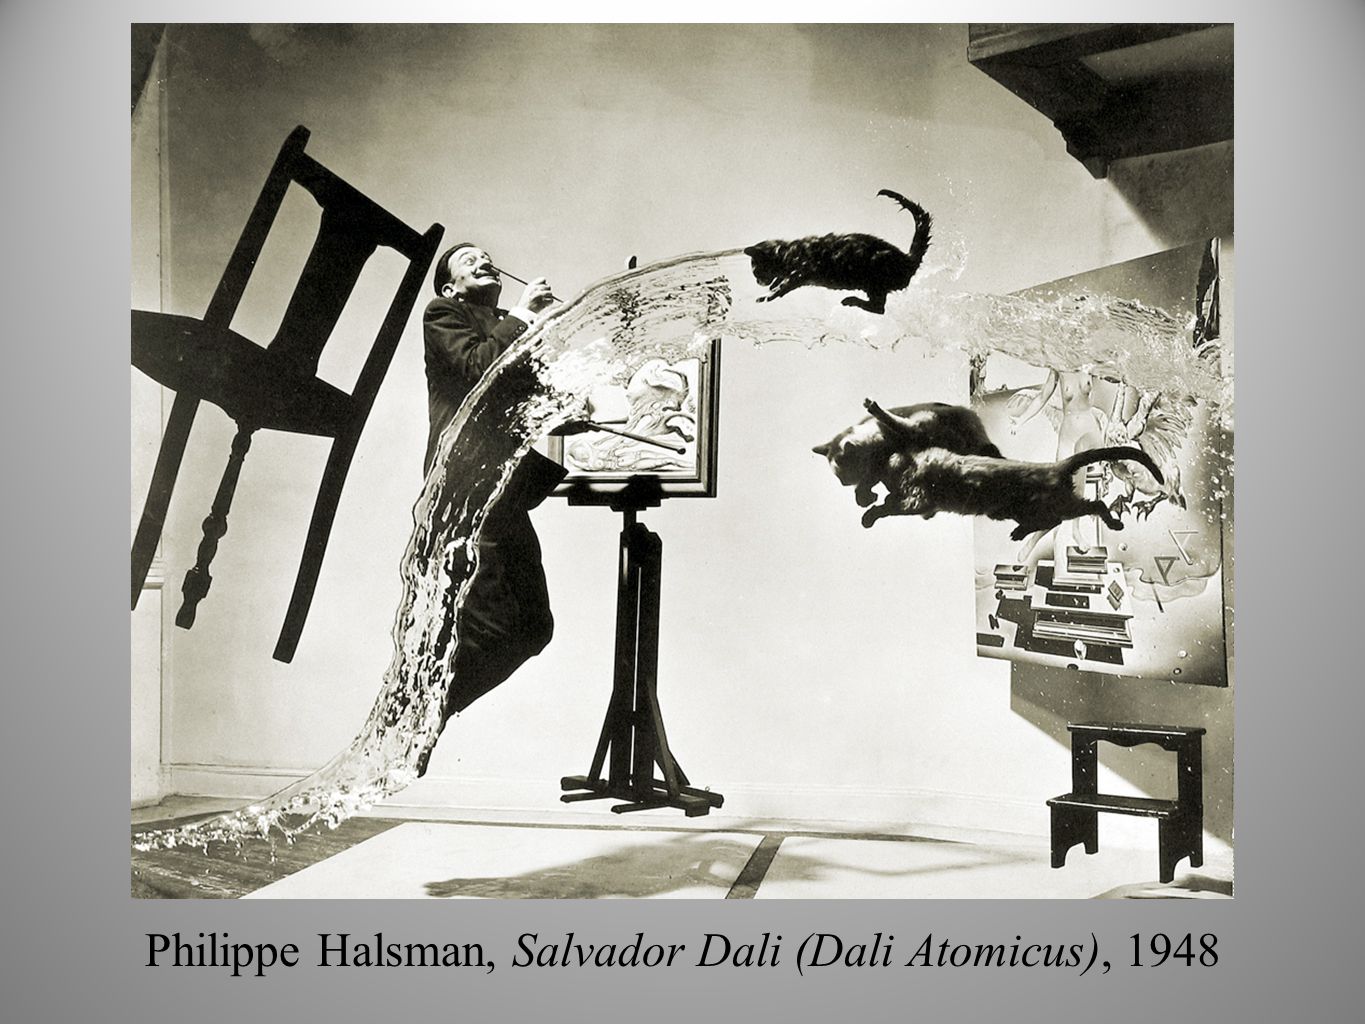 Philippe Halsman, Salvador Dali (Dali Atomicus), 1948